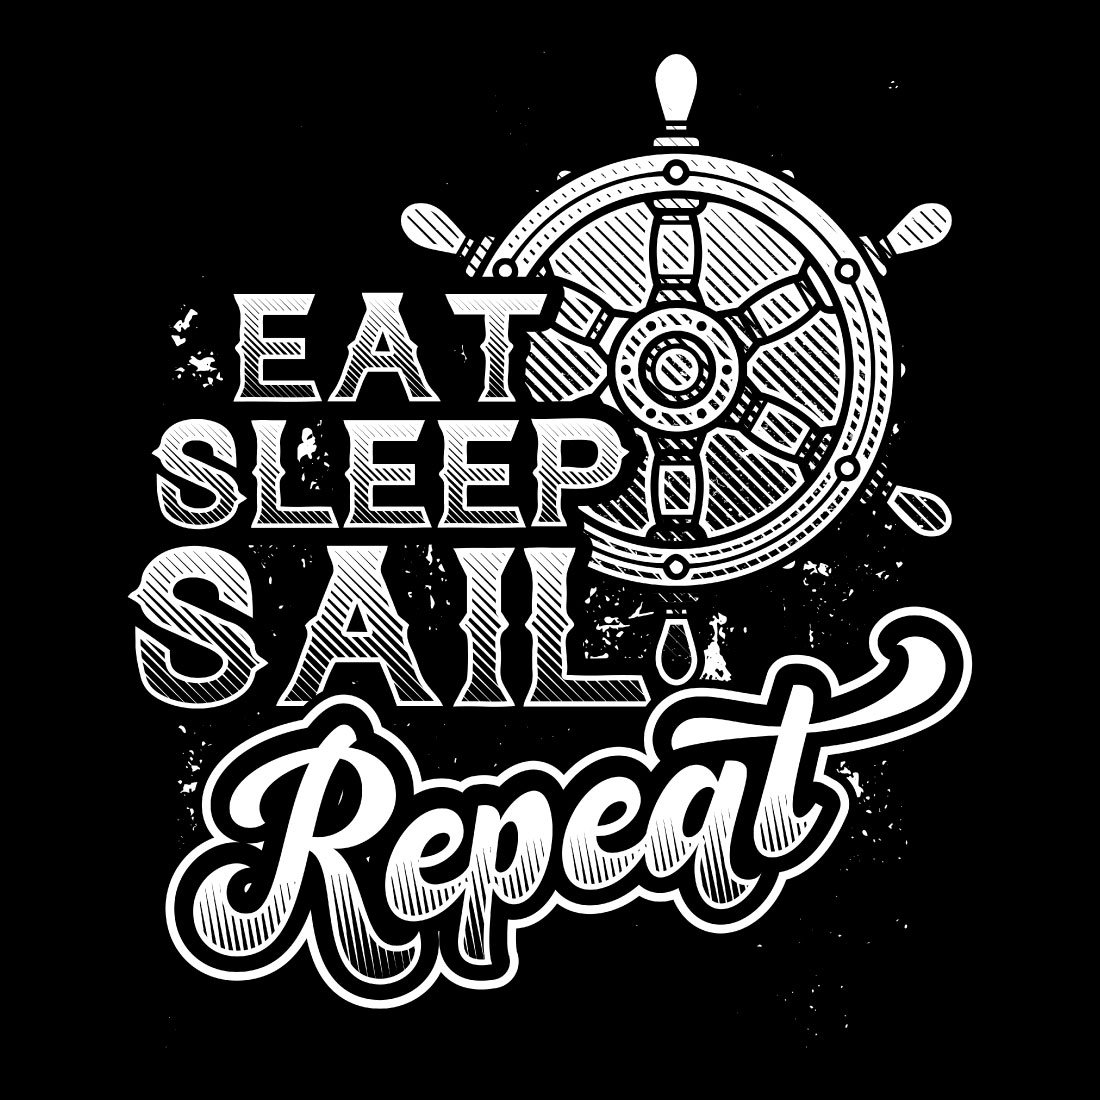 eat sleep sail repeat 01 666